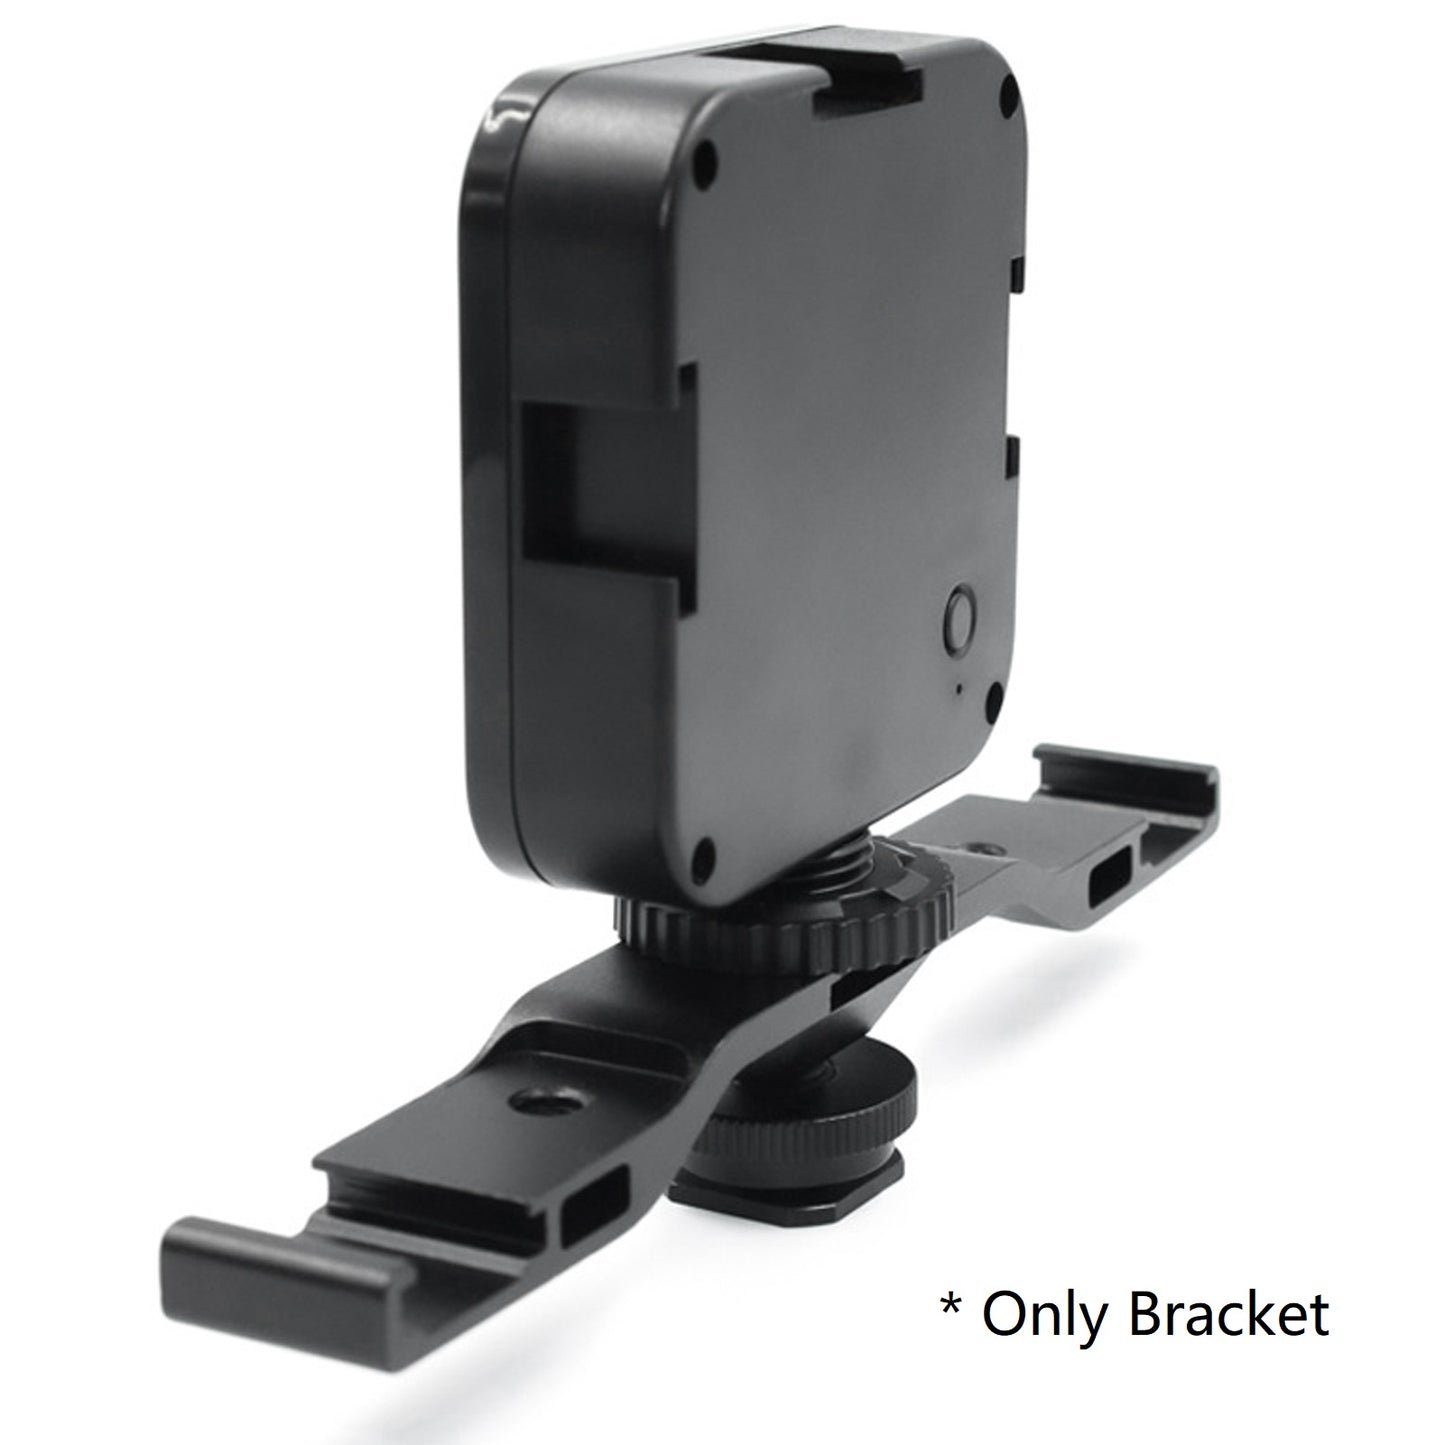 Hridz Aluminum Alloy Cold Shoe Mount Adapter Extension Bar Bracket for DSLR Camera Monitor LED Light Microphone